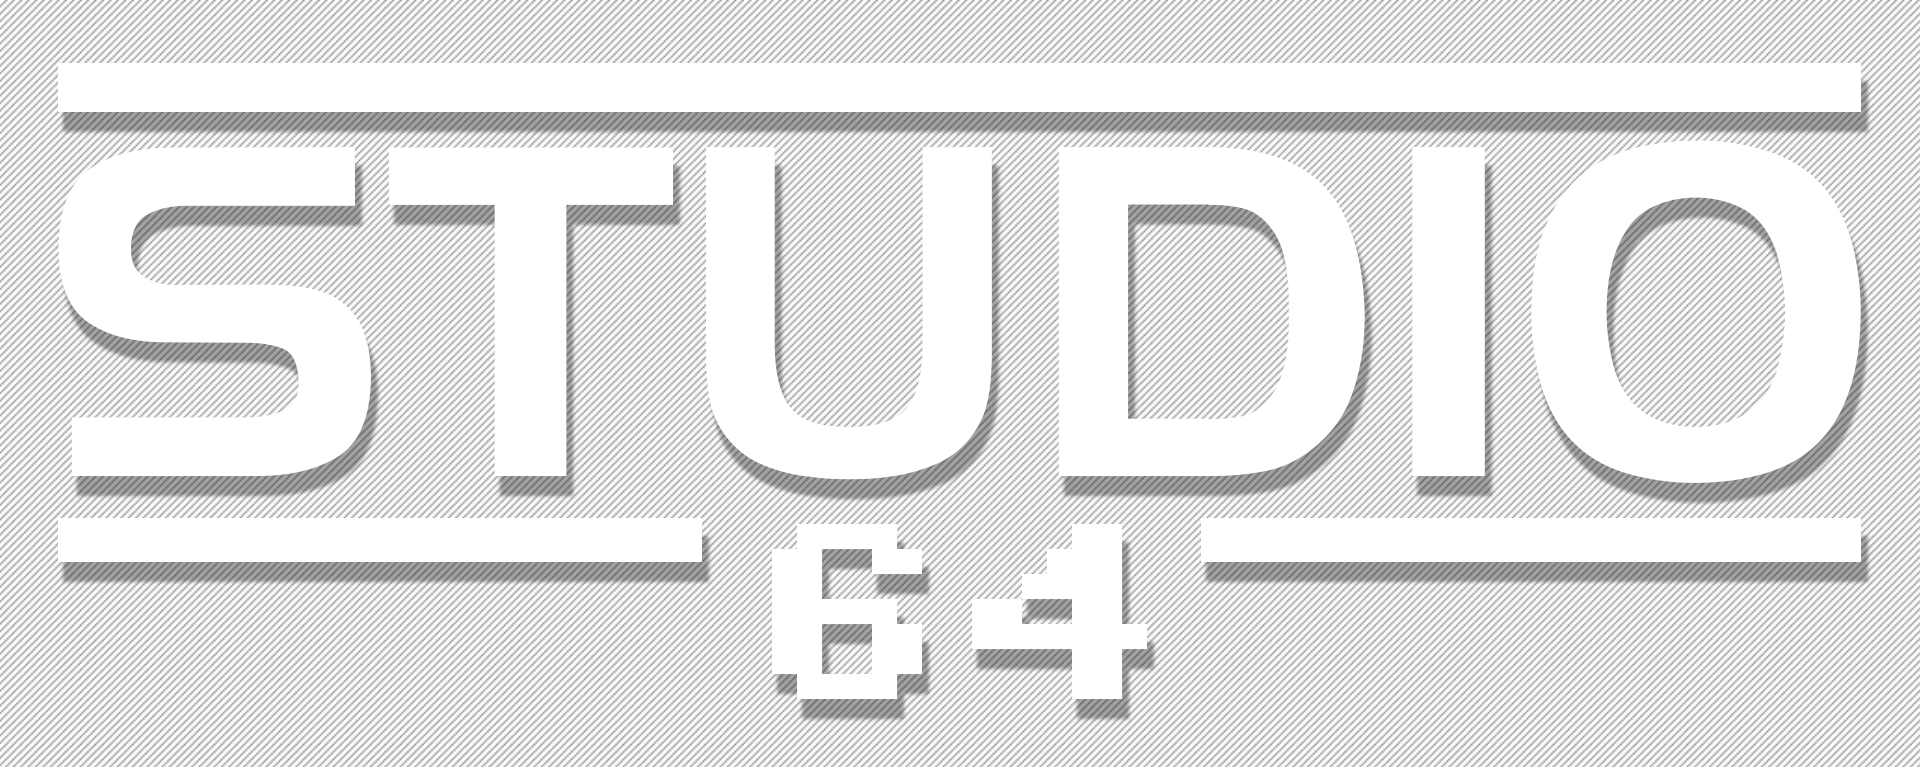 STUDIO64 logo - striped